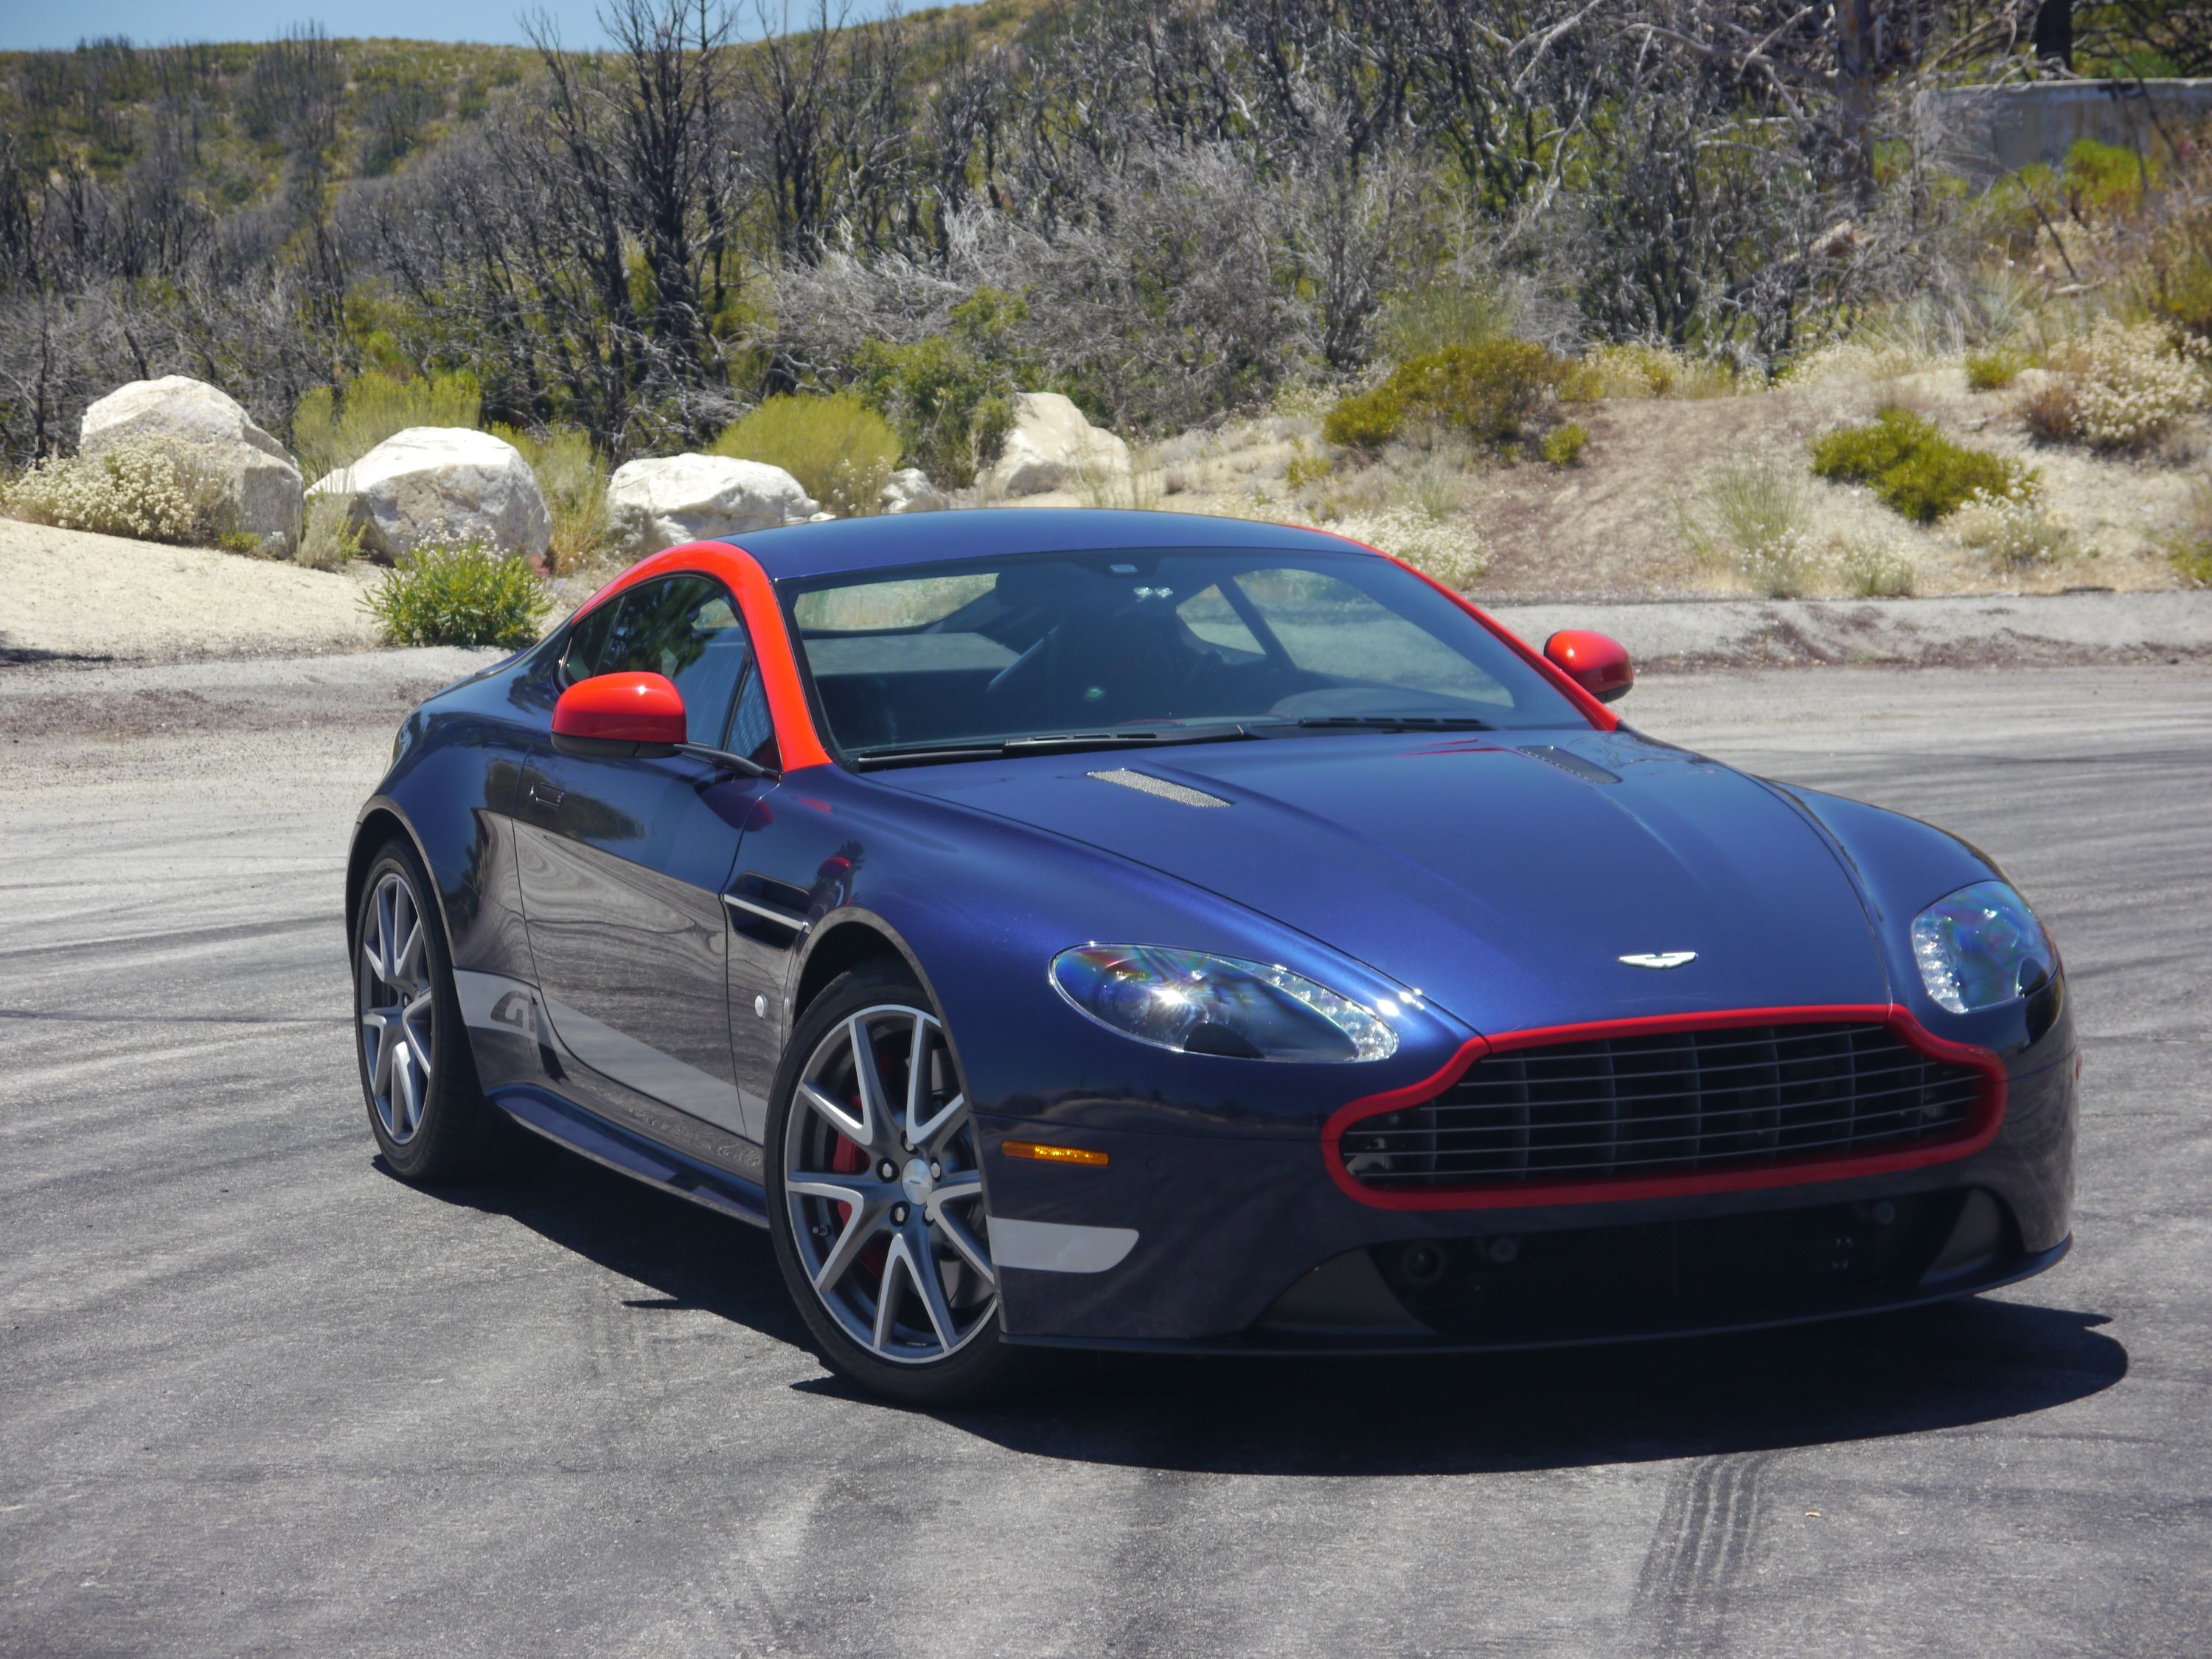 2015 Aston Martin V8 Vantage GT review notes